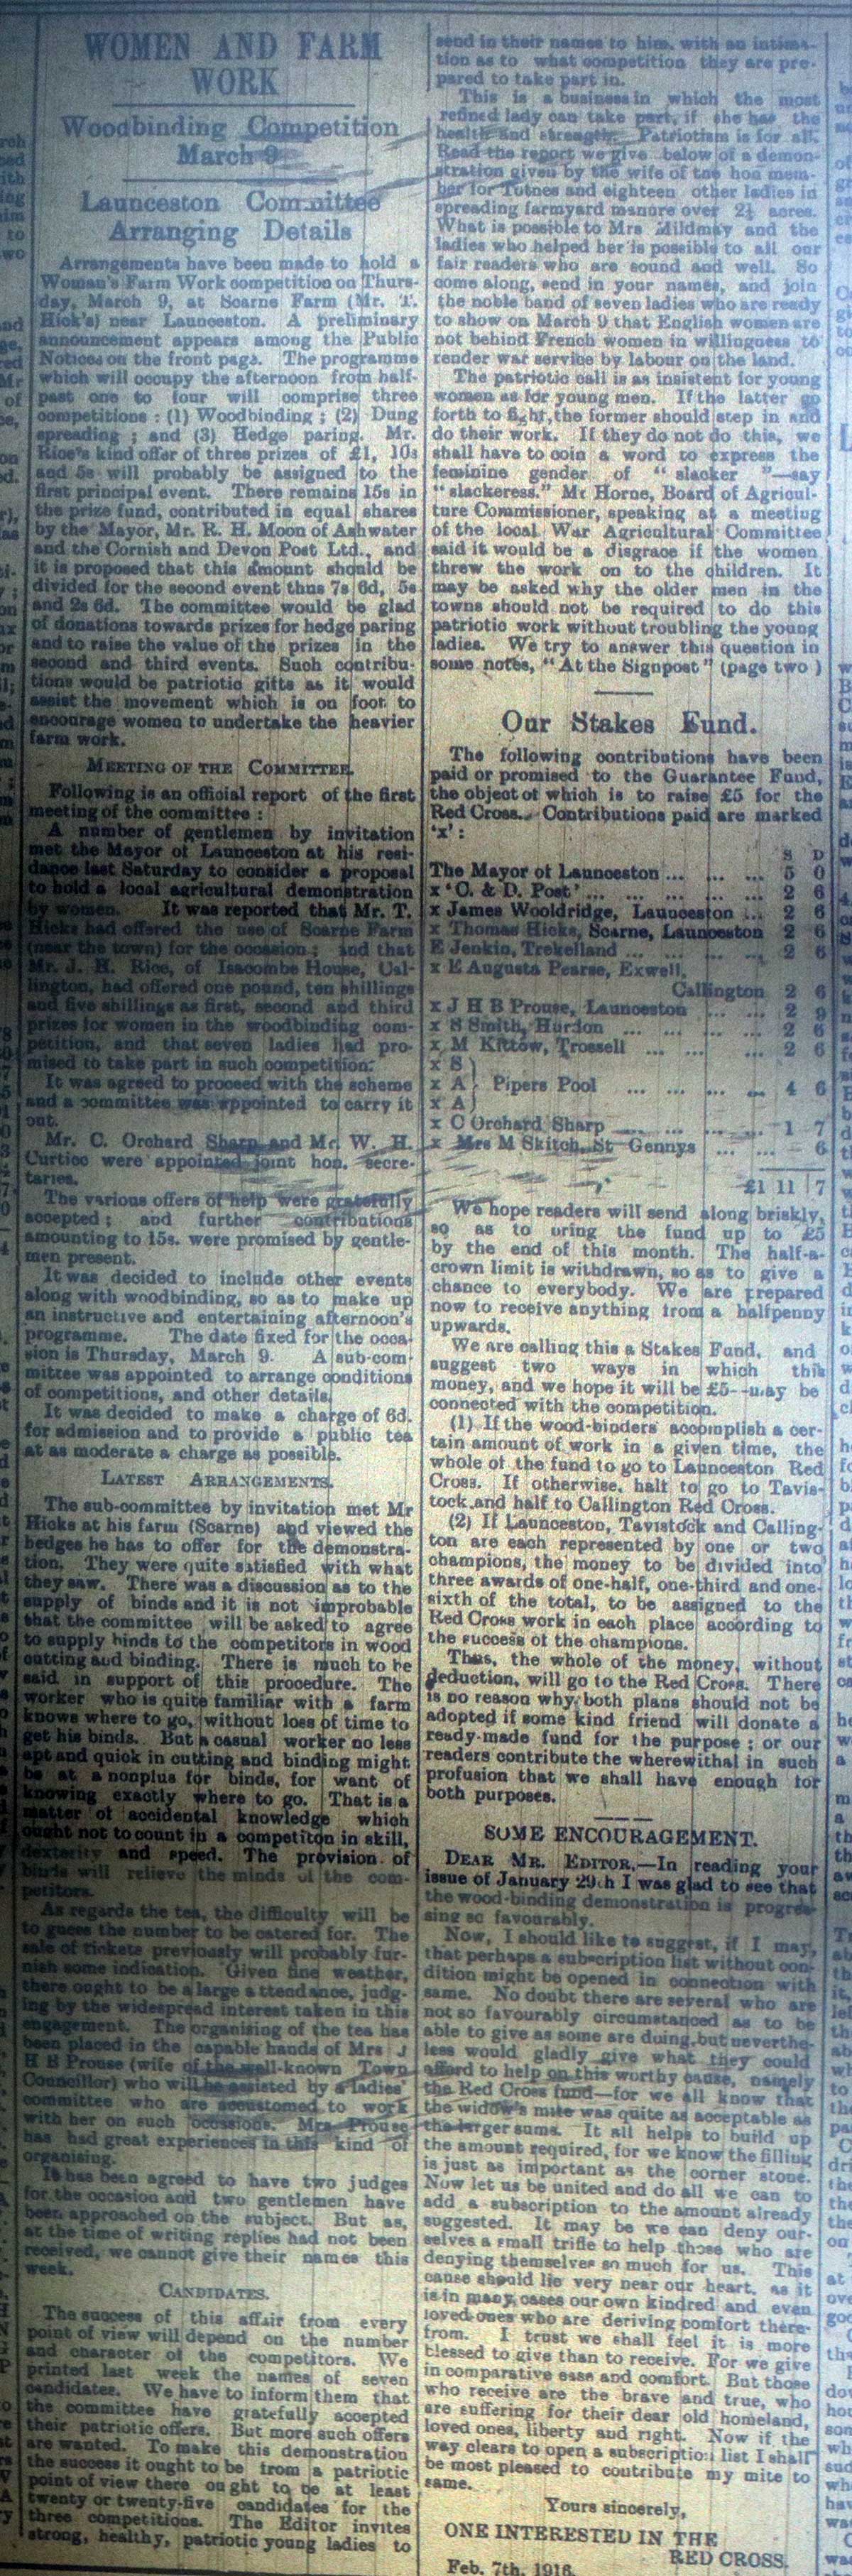 Woodbinding Article February 1916